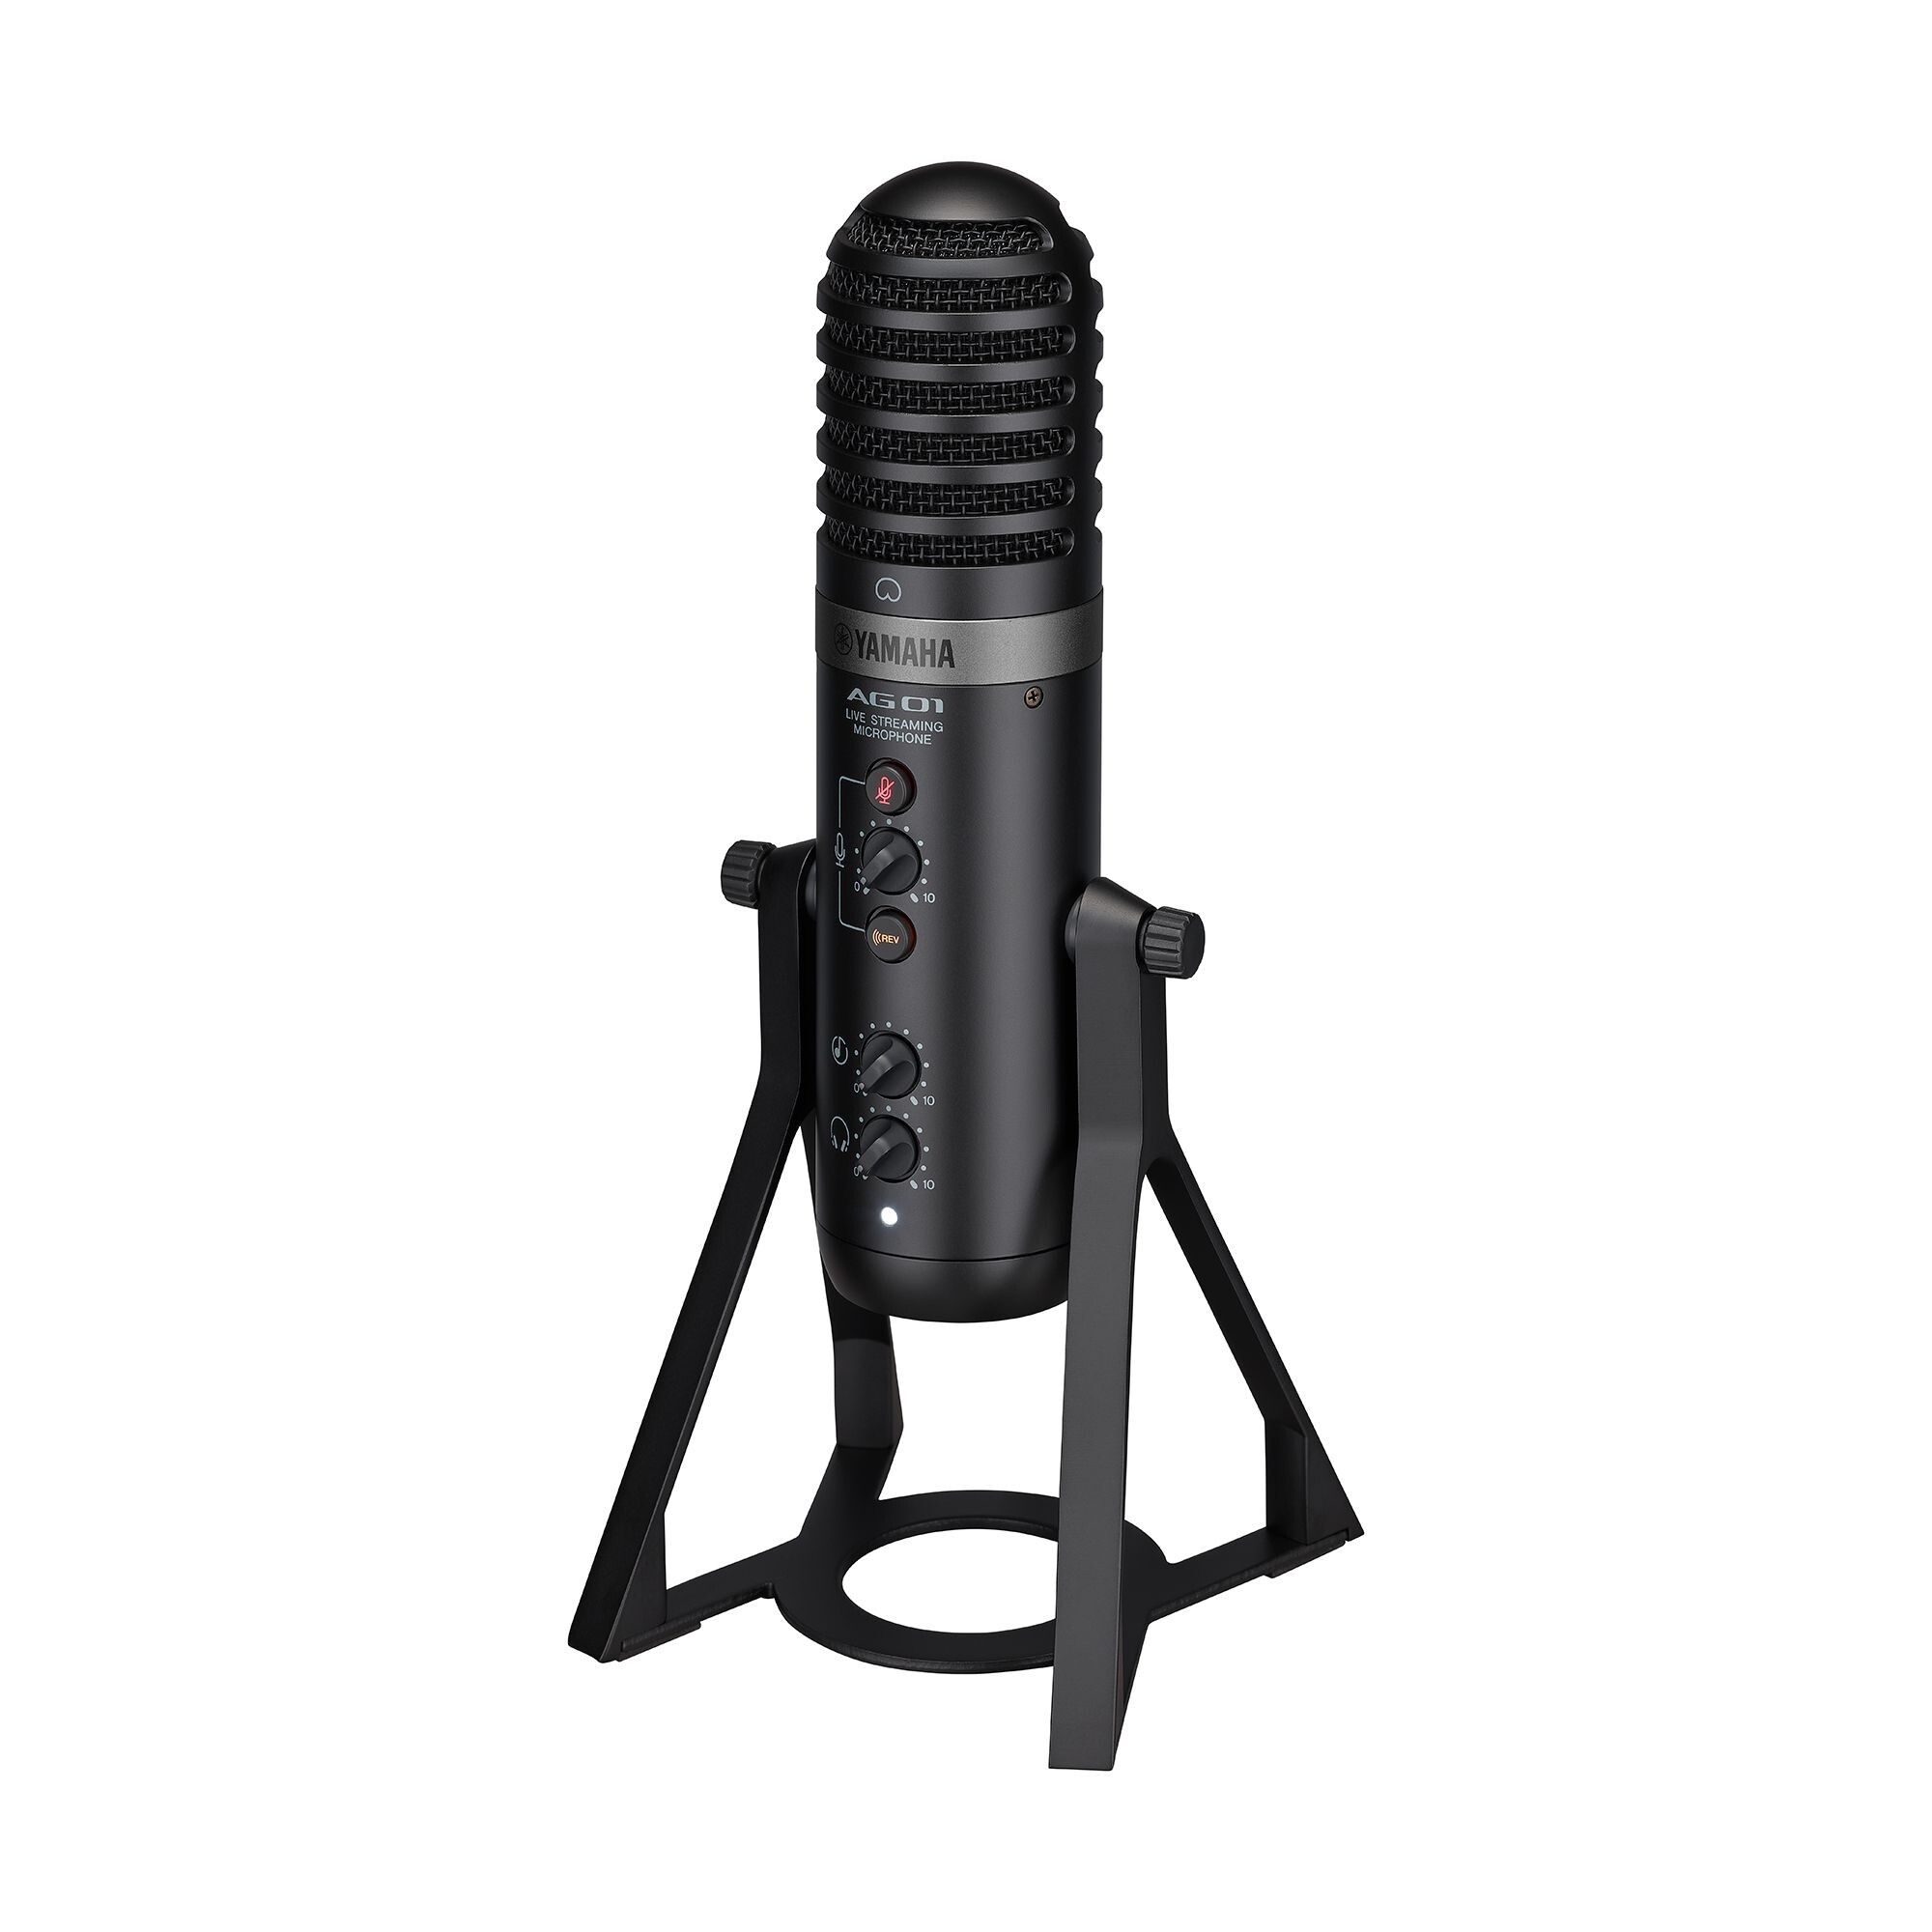 Yamaha-AG01-Live-Streaming-USB-Mikrofon-schwarz